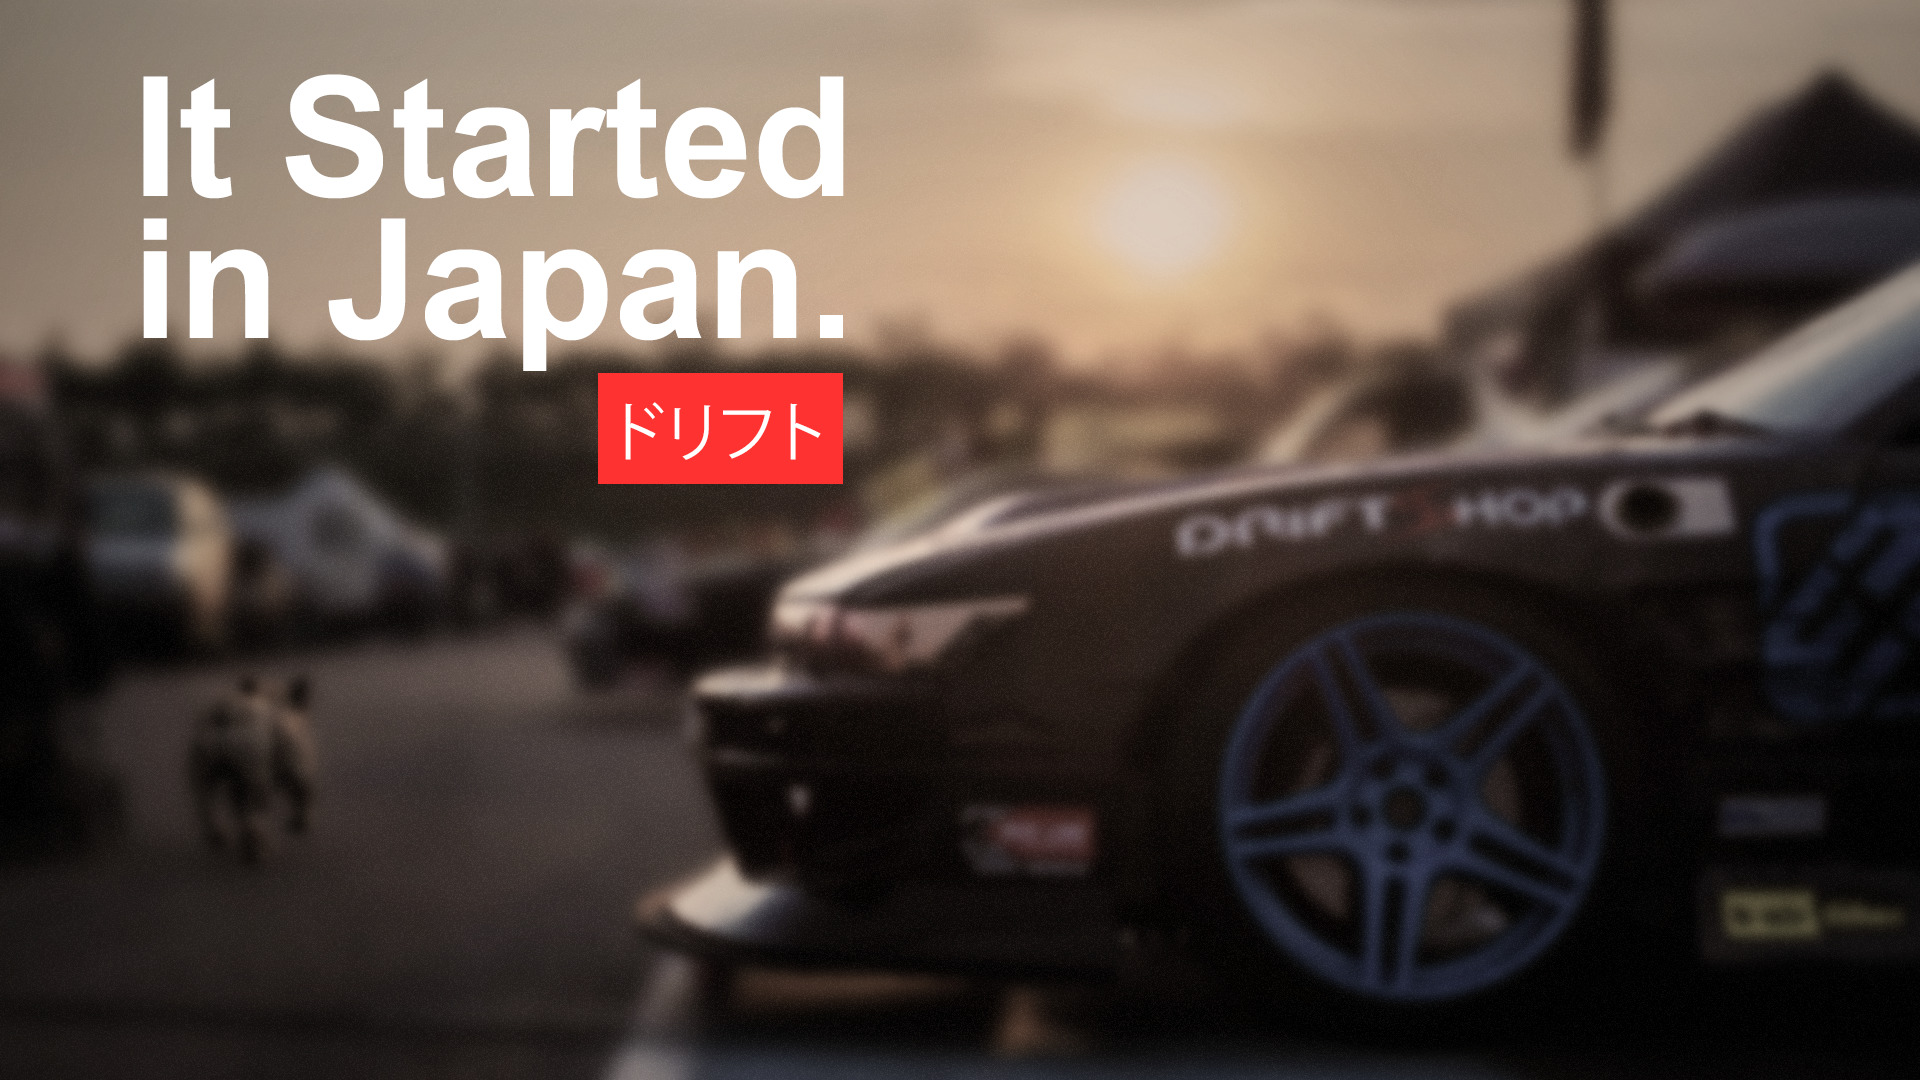 car, Japan, Drift, Drifting, Racing, Vehicle, Japanese Cars, Import, Tuning, Modified, Nissan, Silvia, Silvia S13 Wallpaper